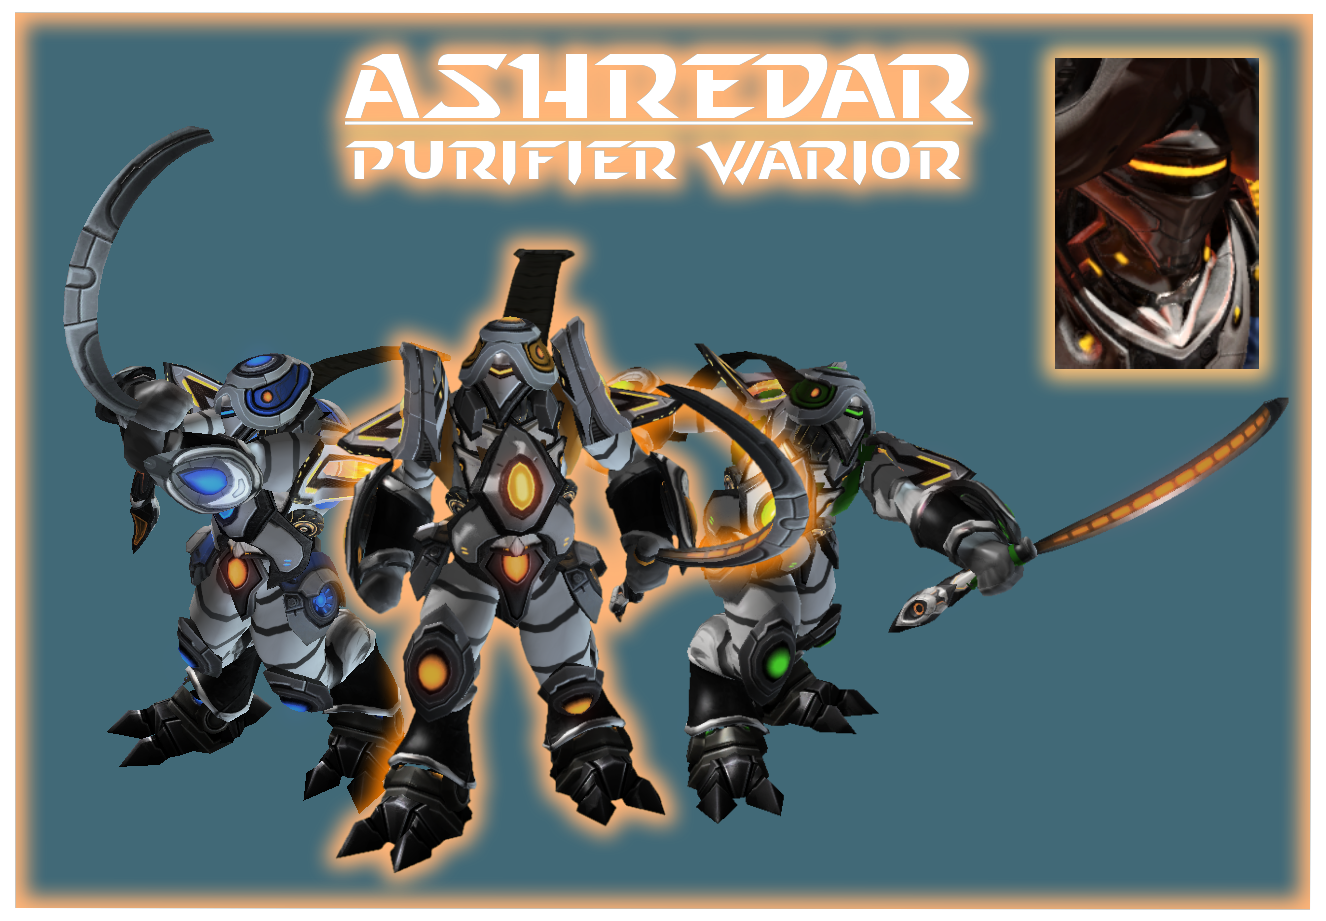 Ashredar - Purifier